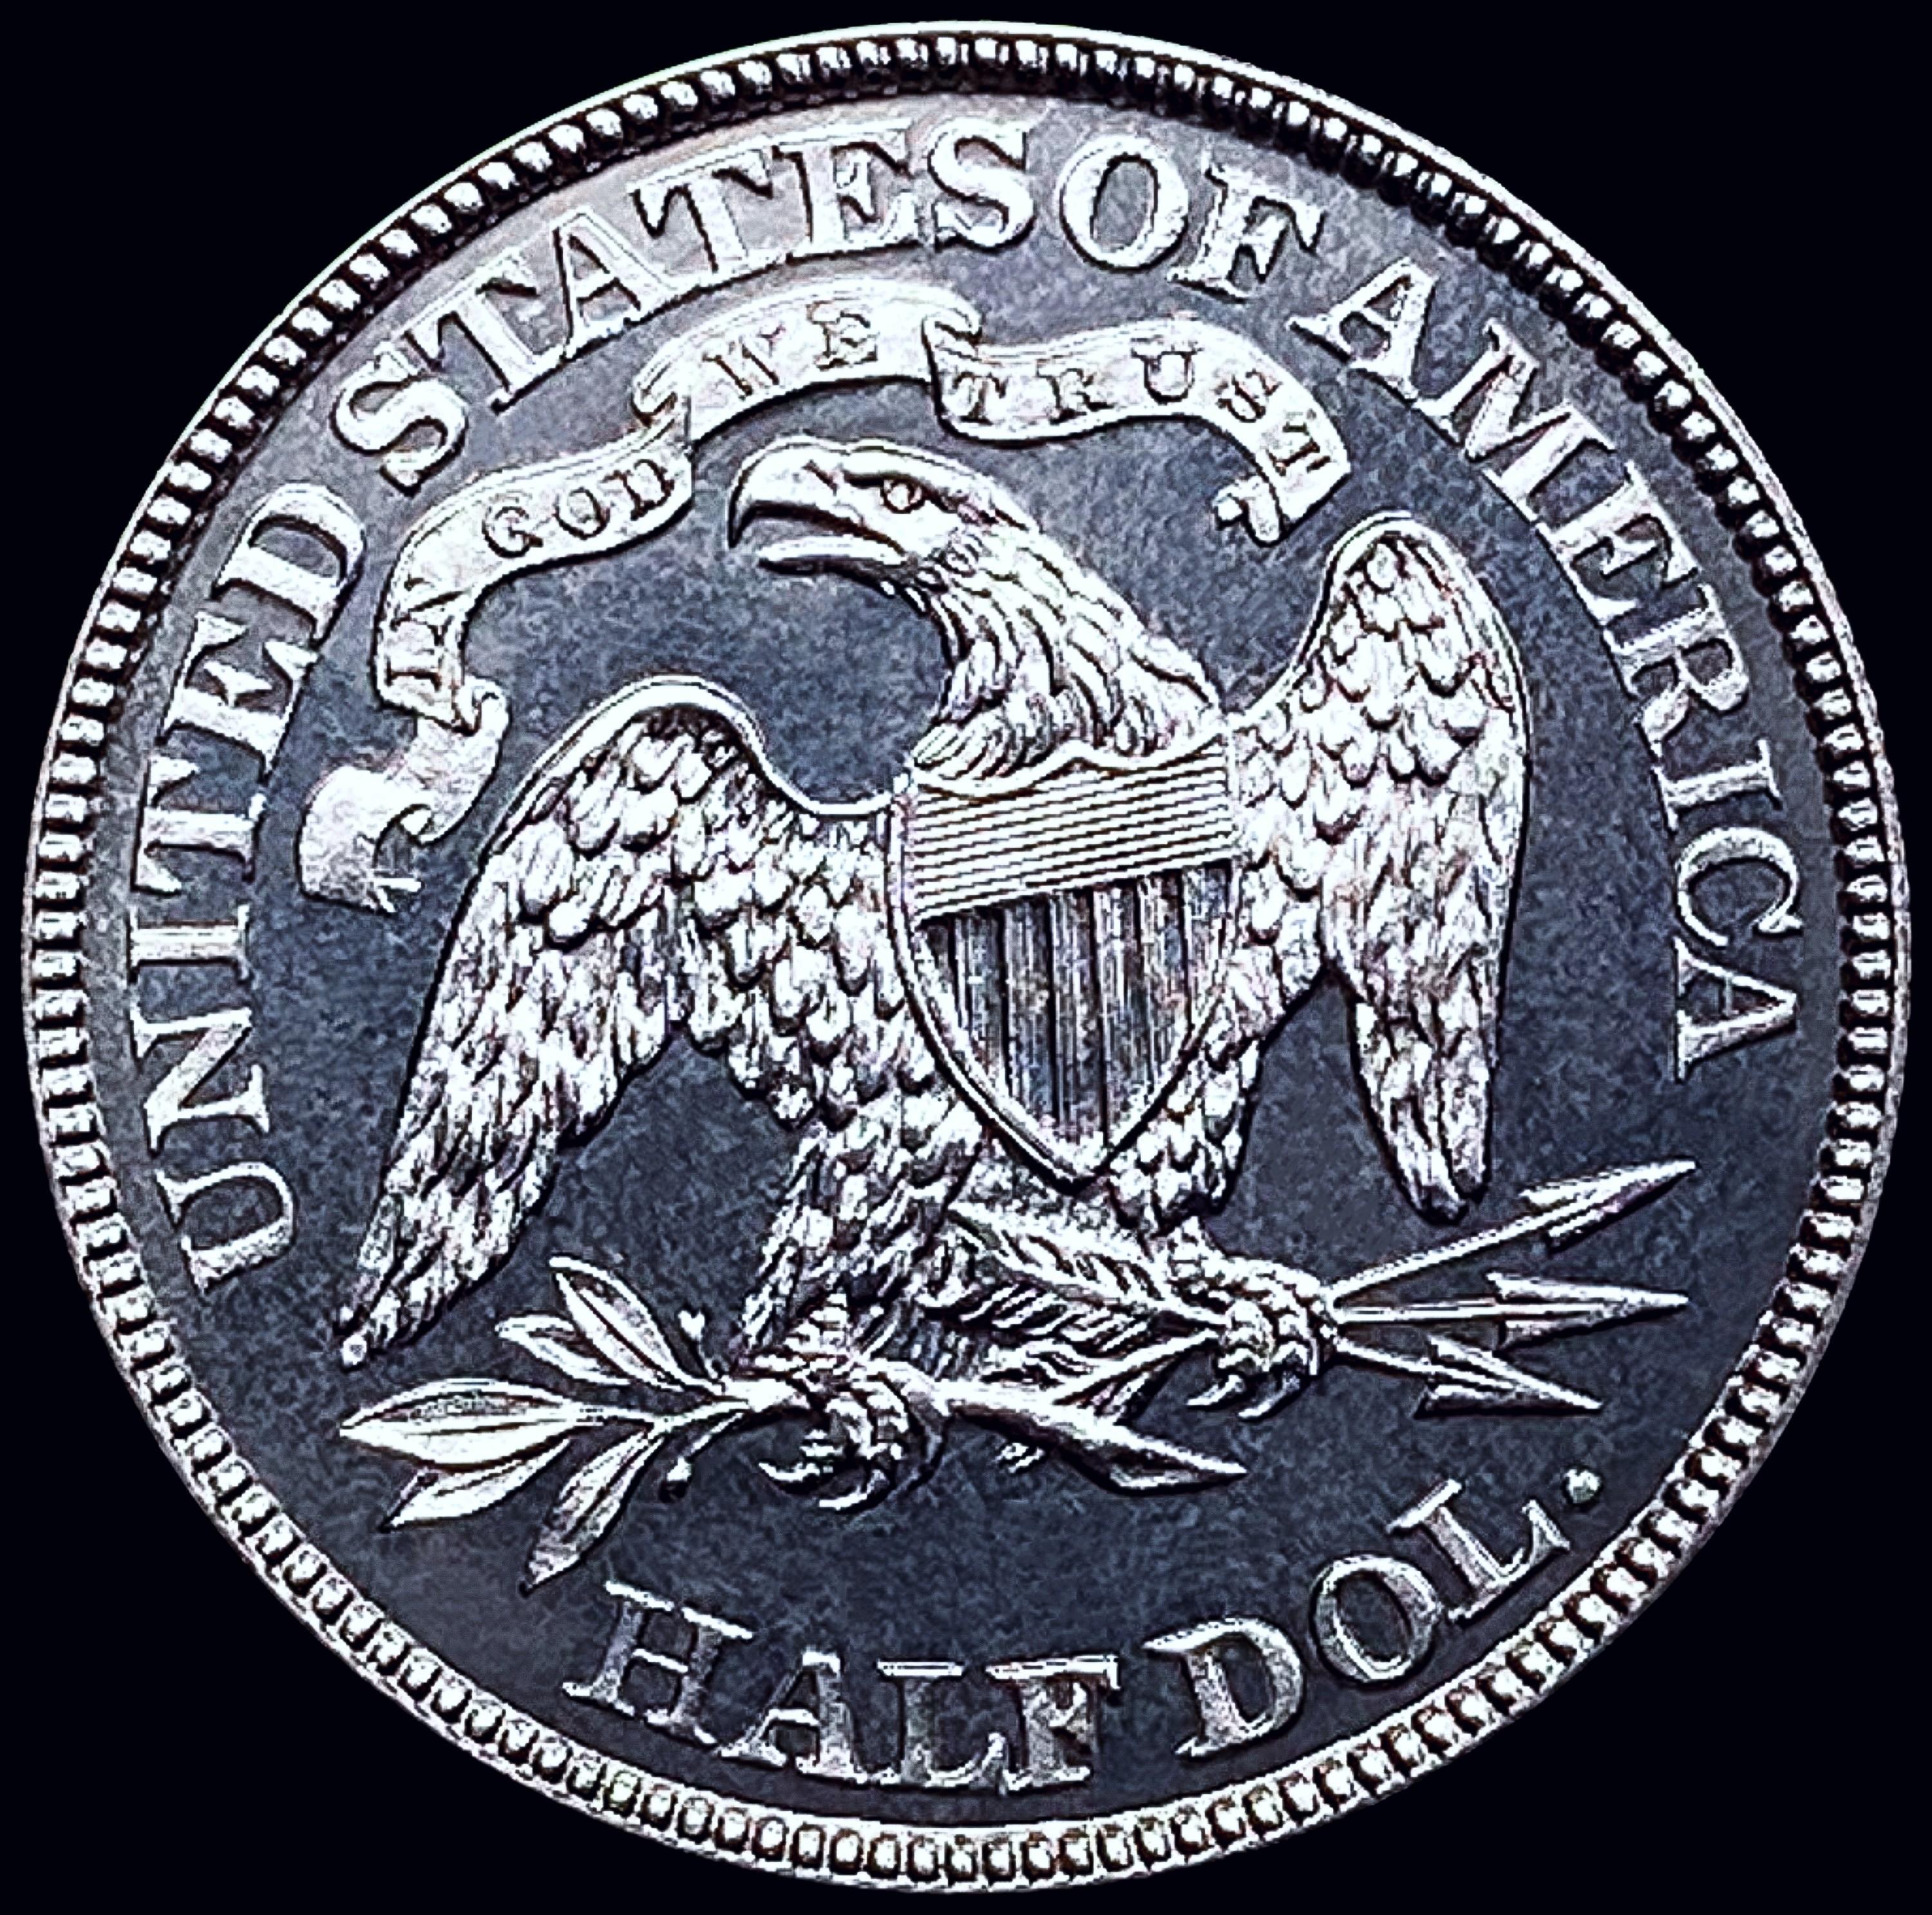 1884 Seated Liberty Half Dollar SUPERB GEM PROOF CAM